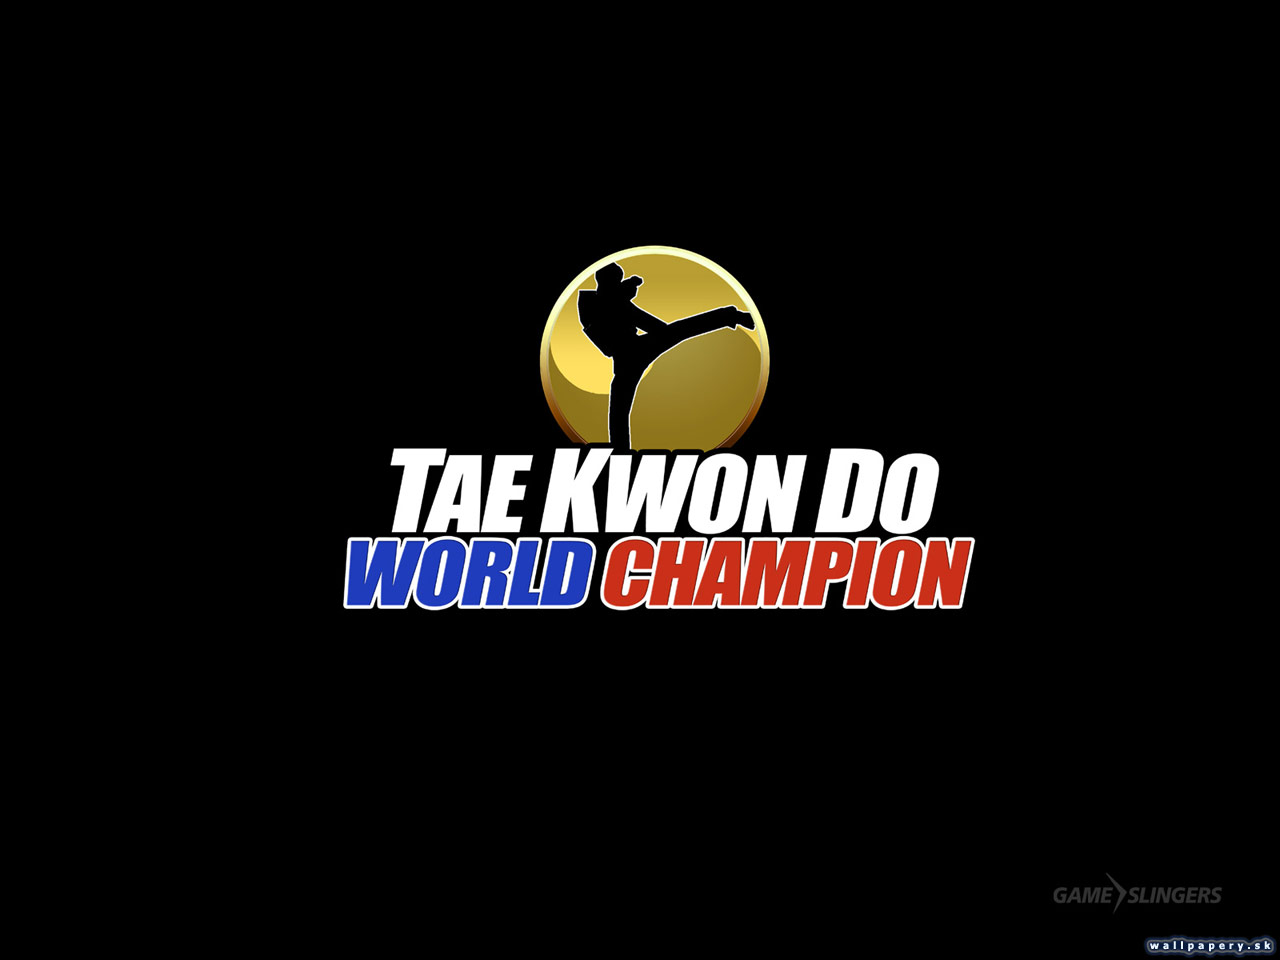 Tae Kwon Do World Champion - wallpaper 2